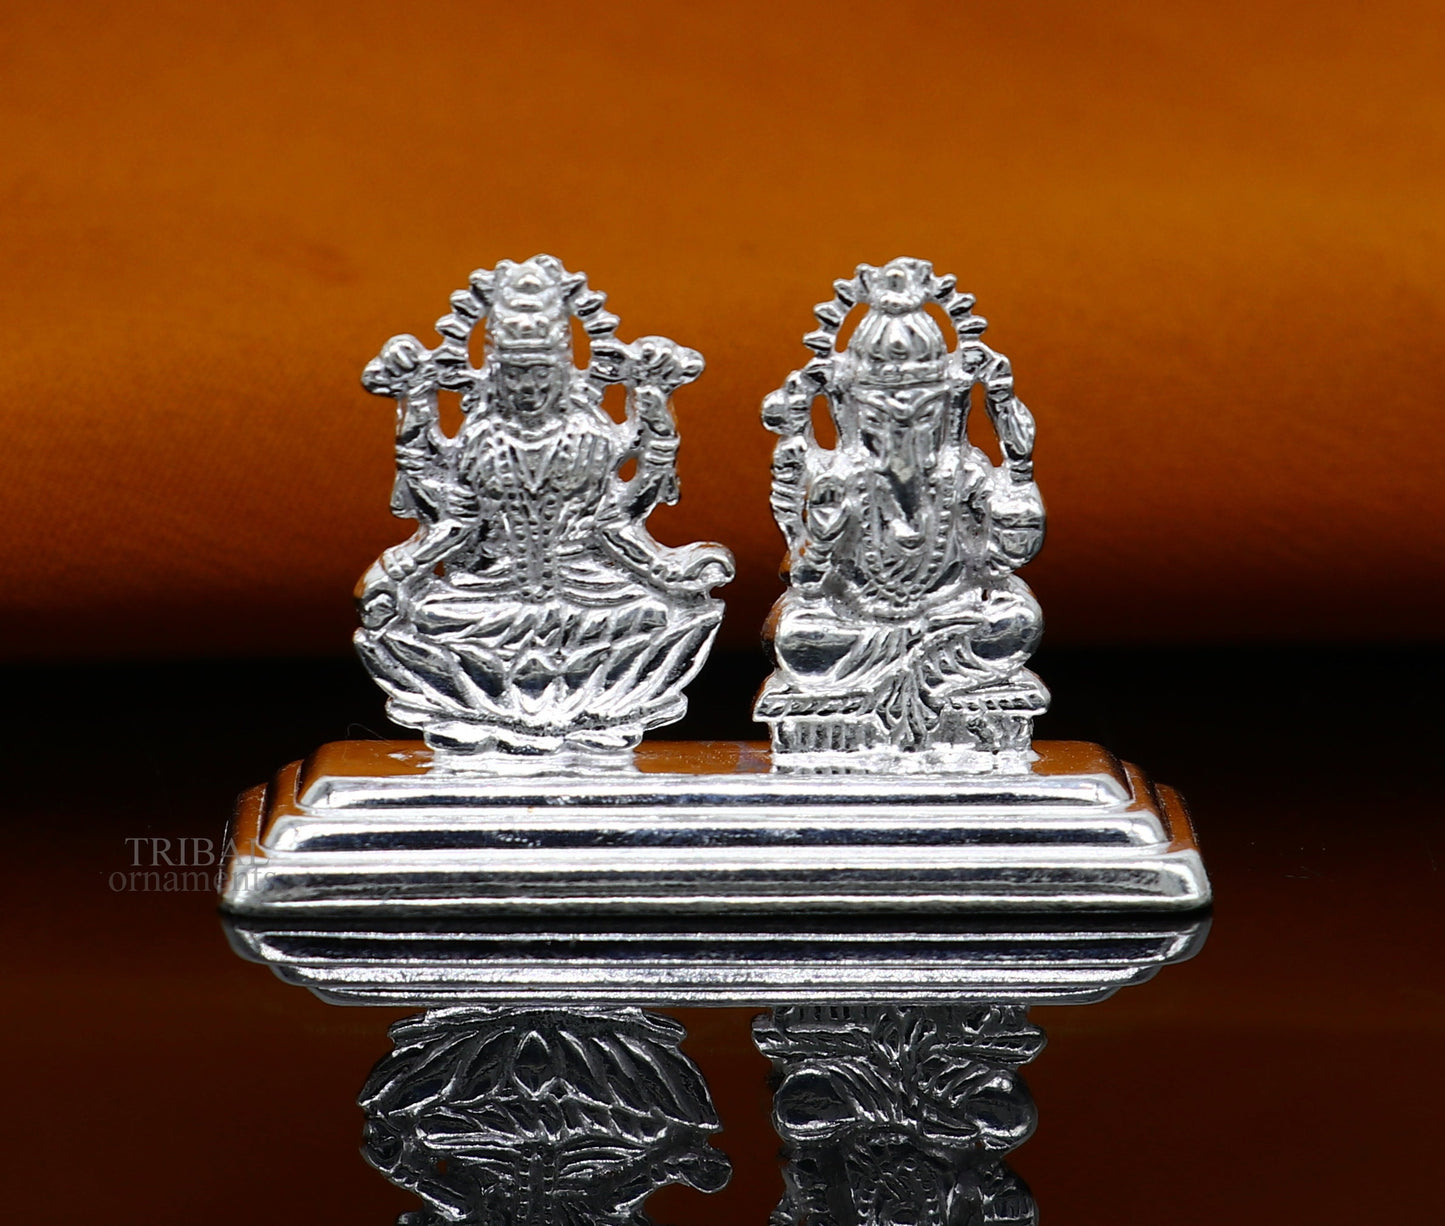 Solid Sterling silver handmade customized Hindu idols Laxmi and Ganesha statue, puja article figurine, home décor Diwali puja gift art456 - TRIBAL ORNAMENTS